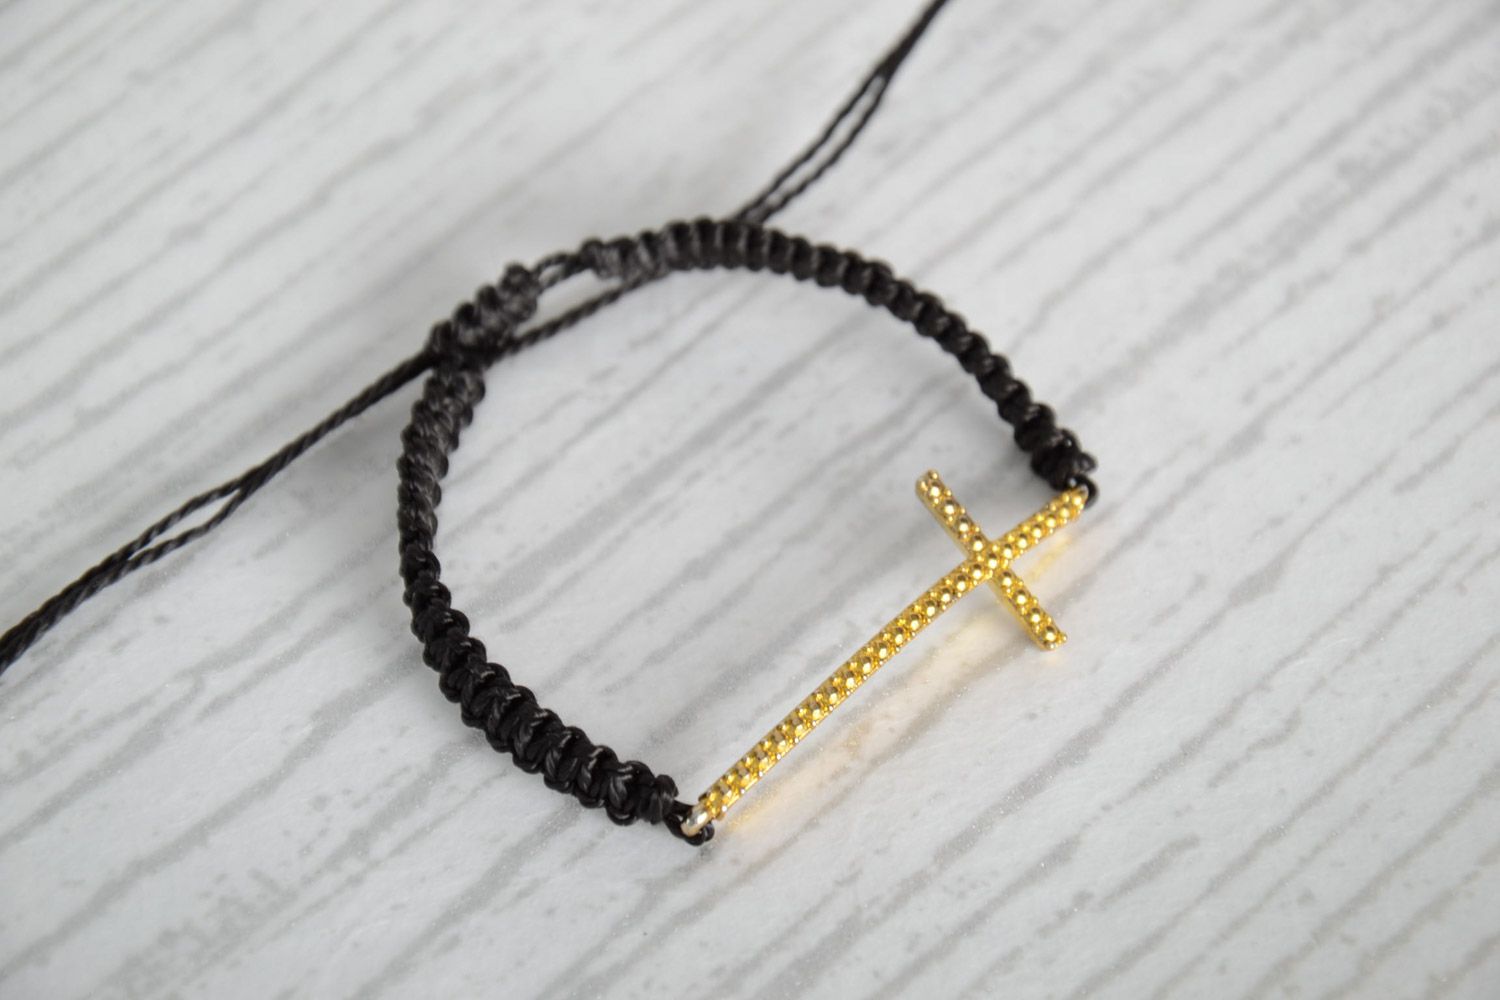 Handmade friendship wrist bracelet woven of caprone threads with metal cross charm photo 1